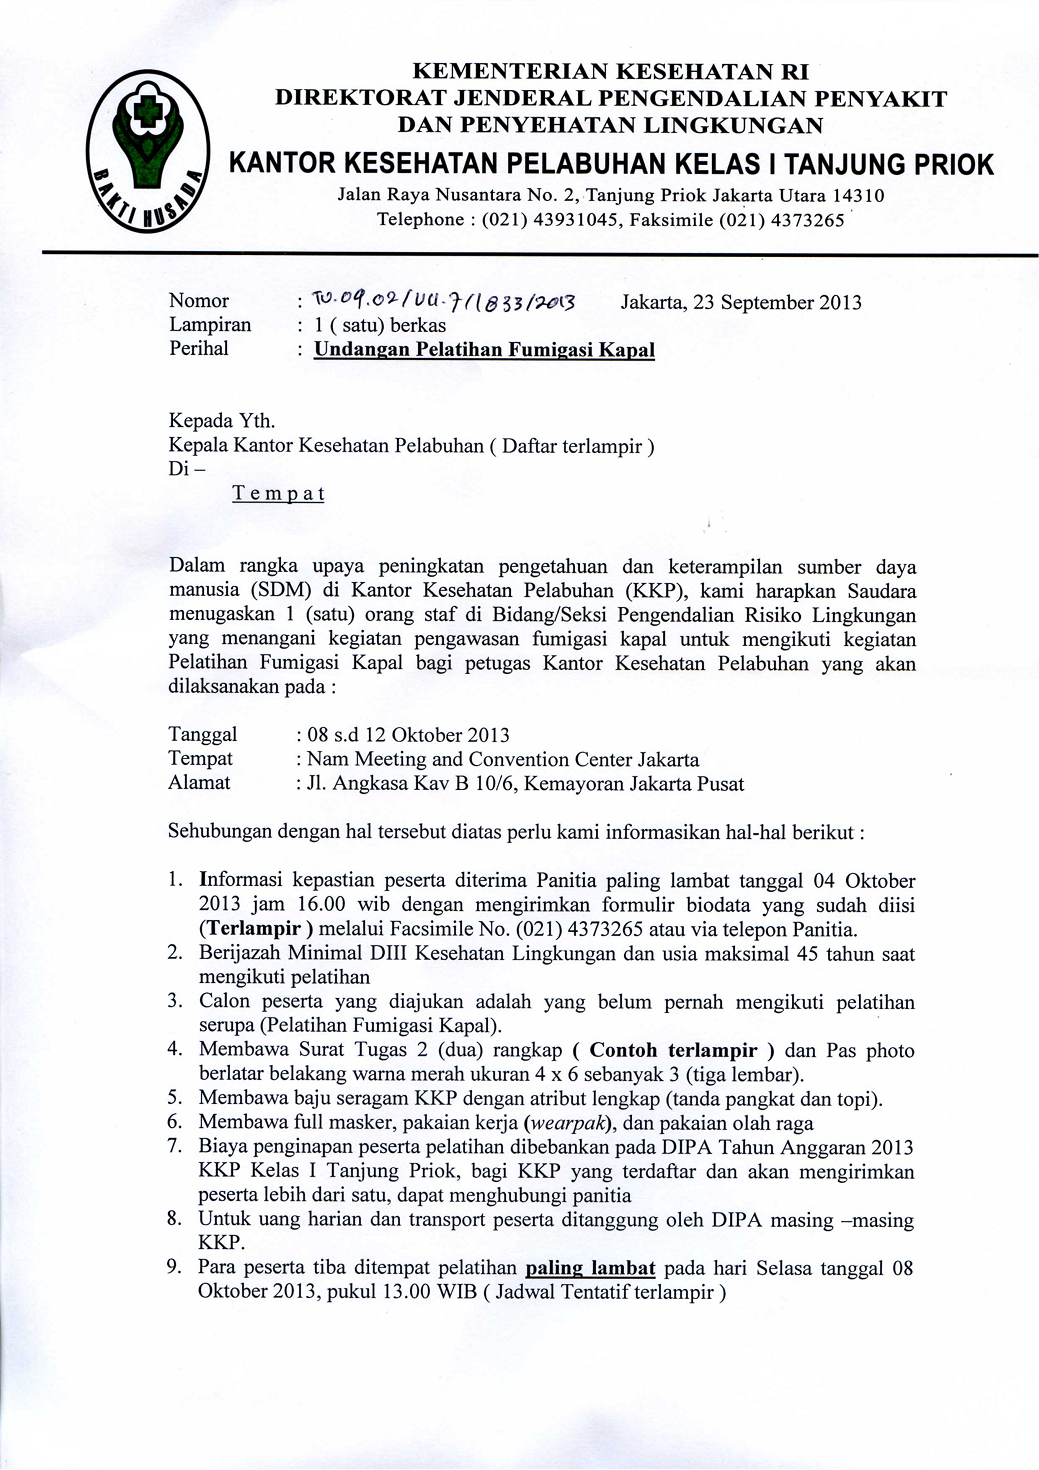 Konfirmasi Undangan Pelatihan Fumigasi Kapal Bagi Petugas KKP tahun ...